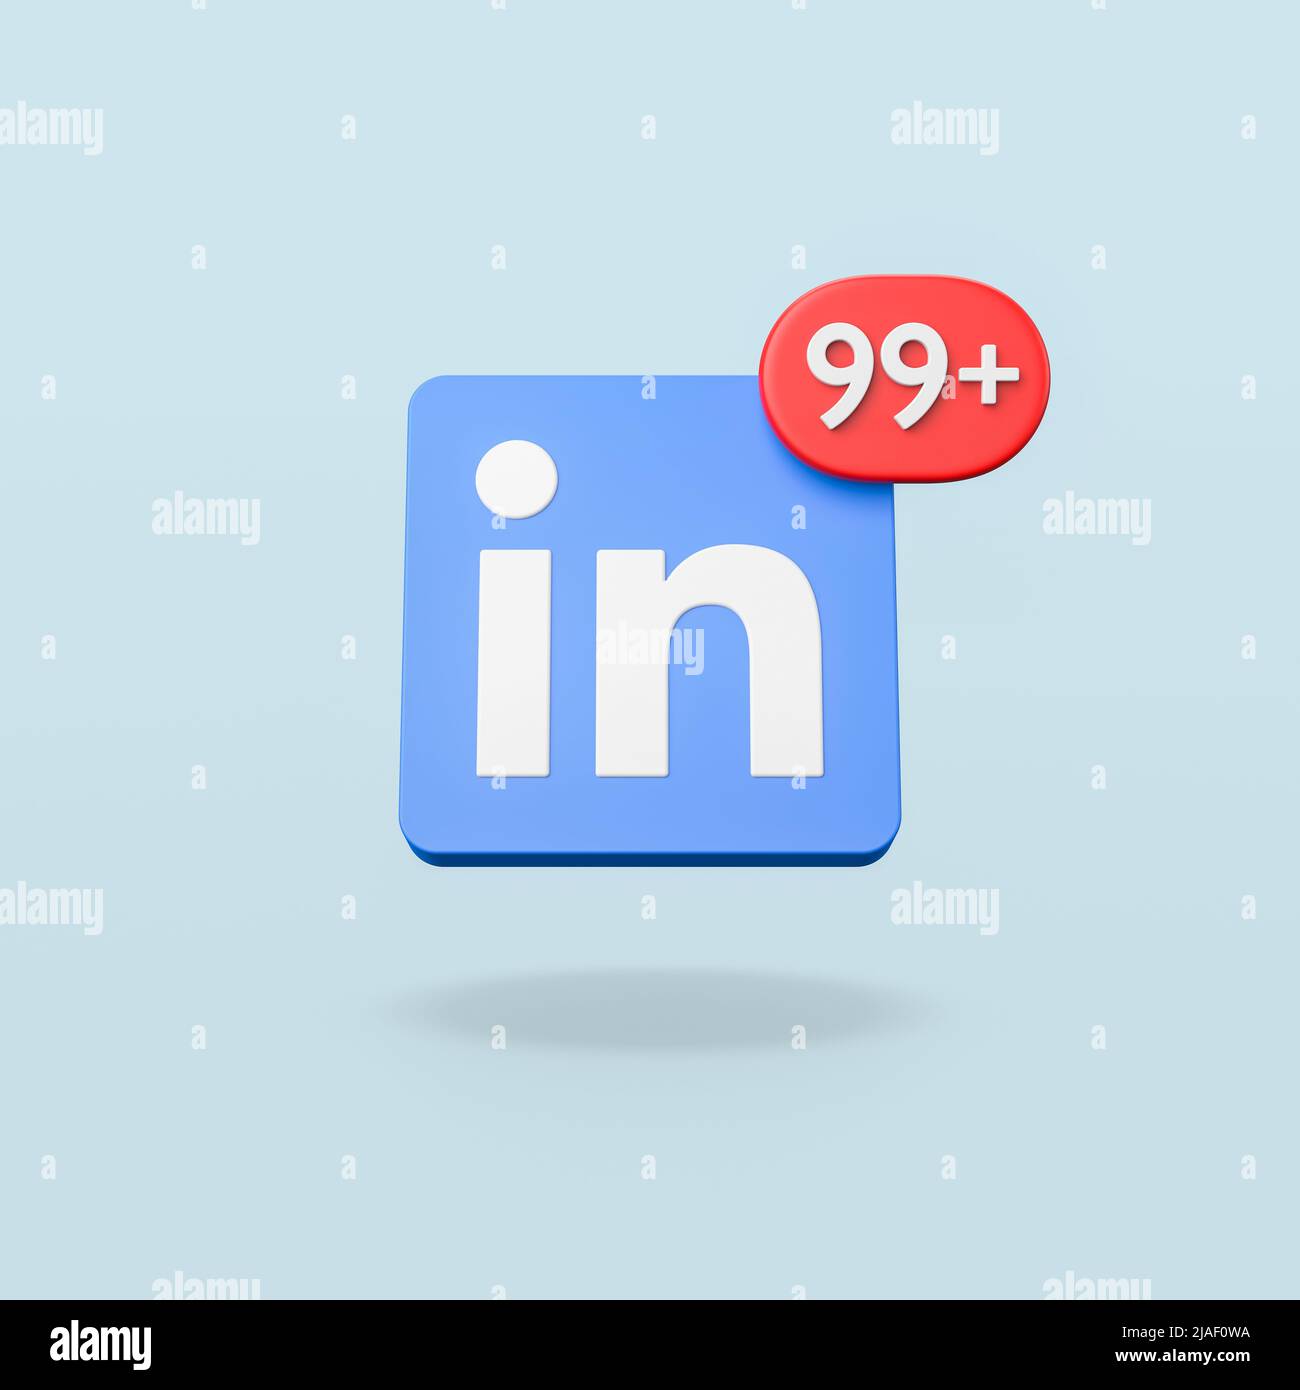 Linkedin Logo with 99 Notification on Blue Background Stock Photo